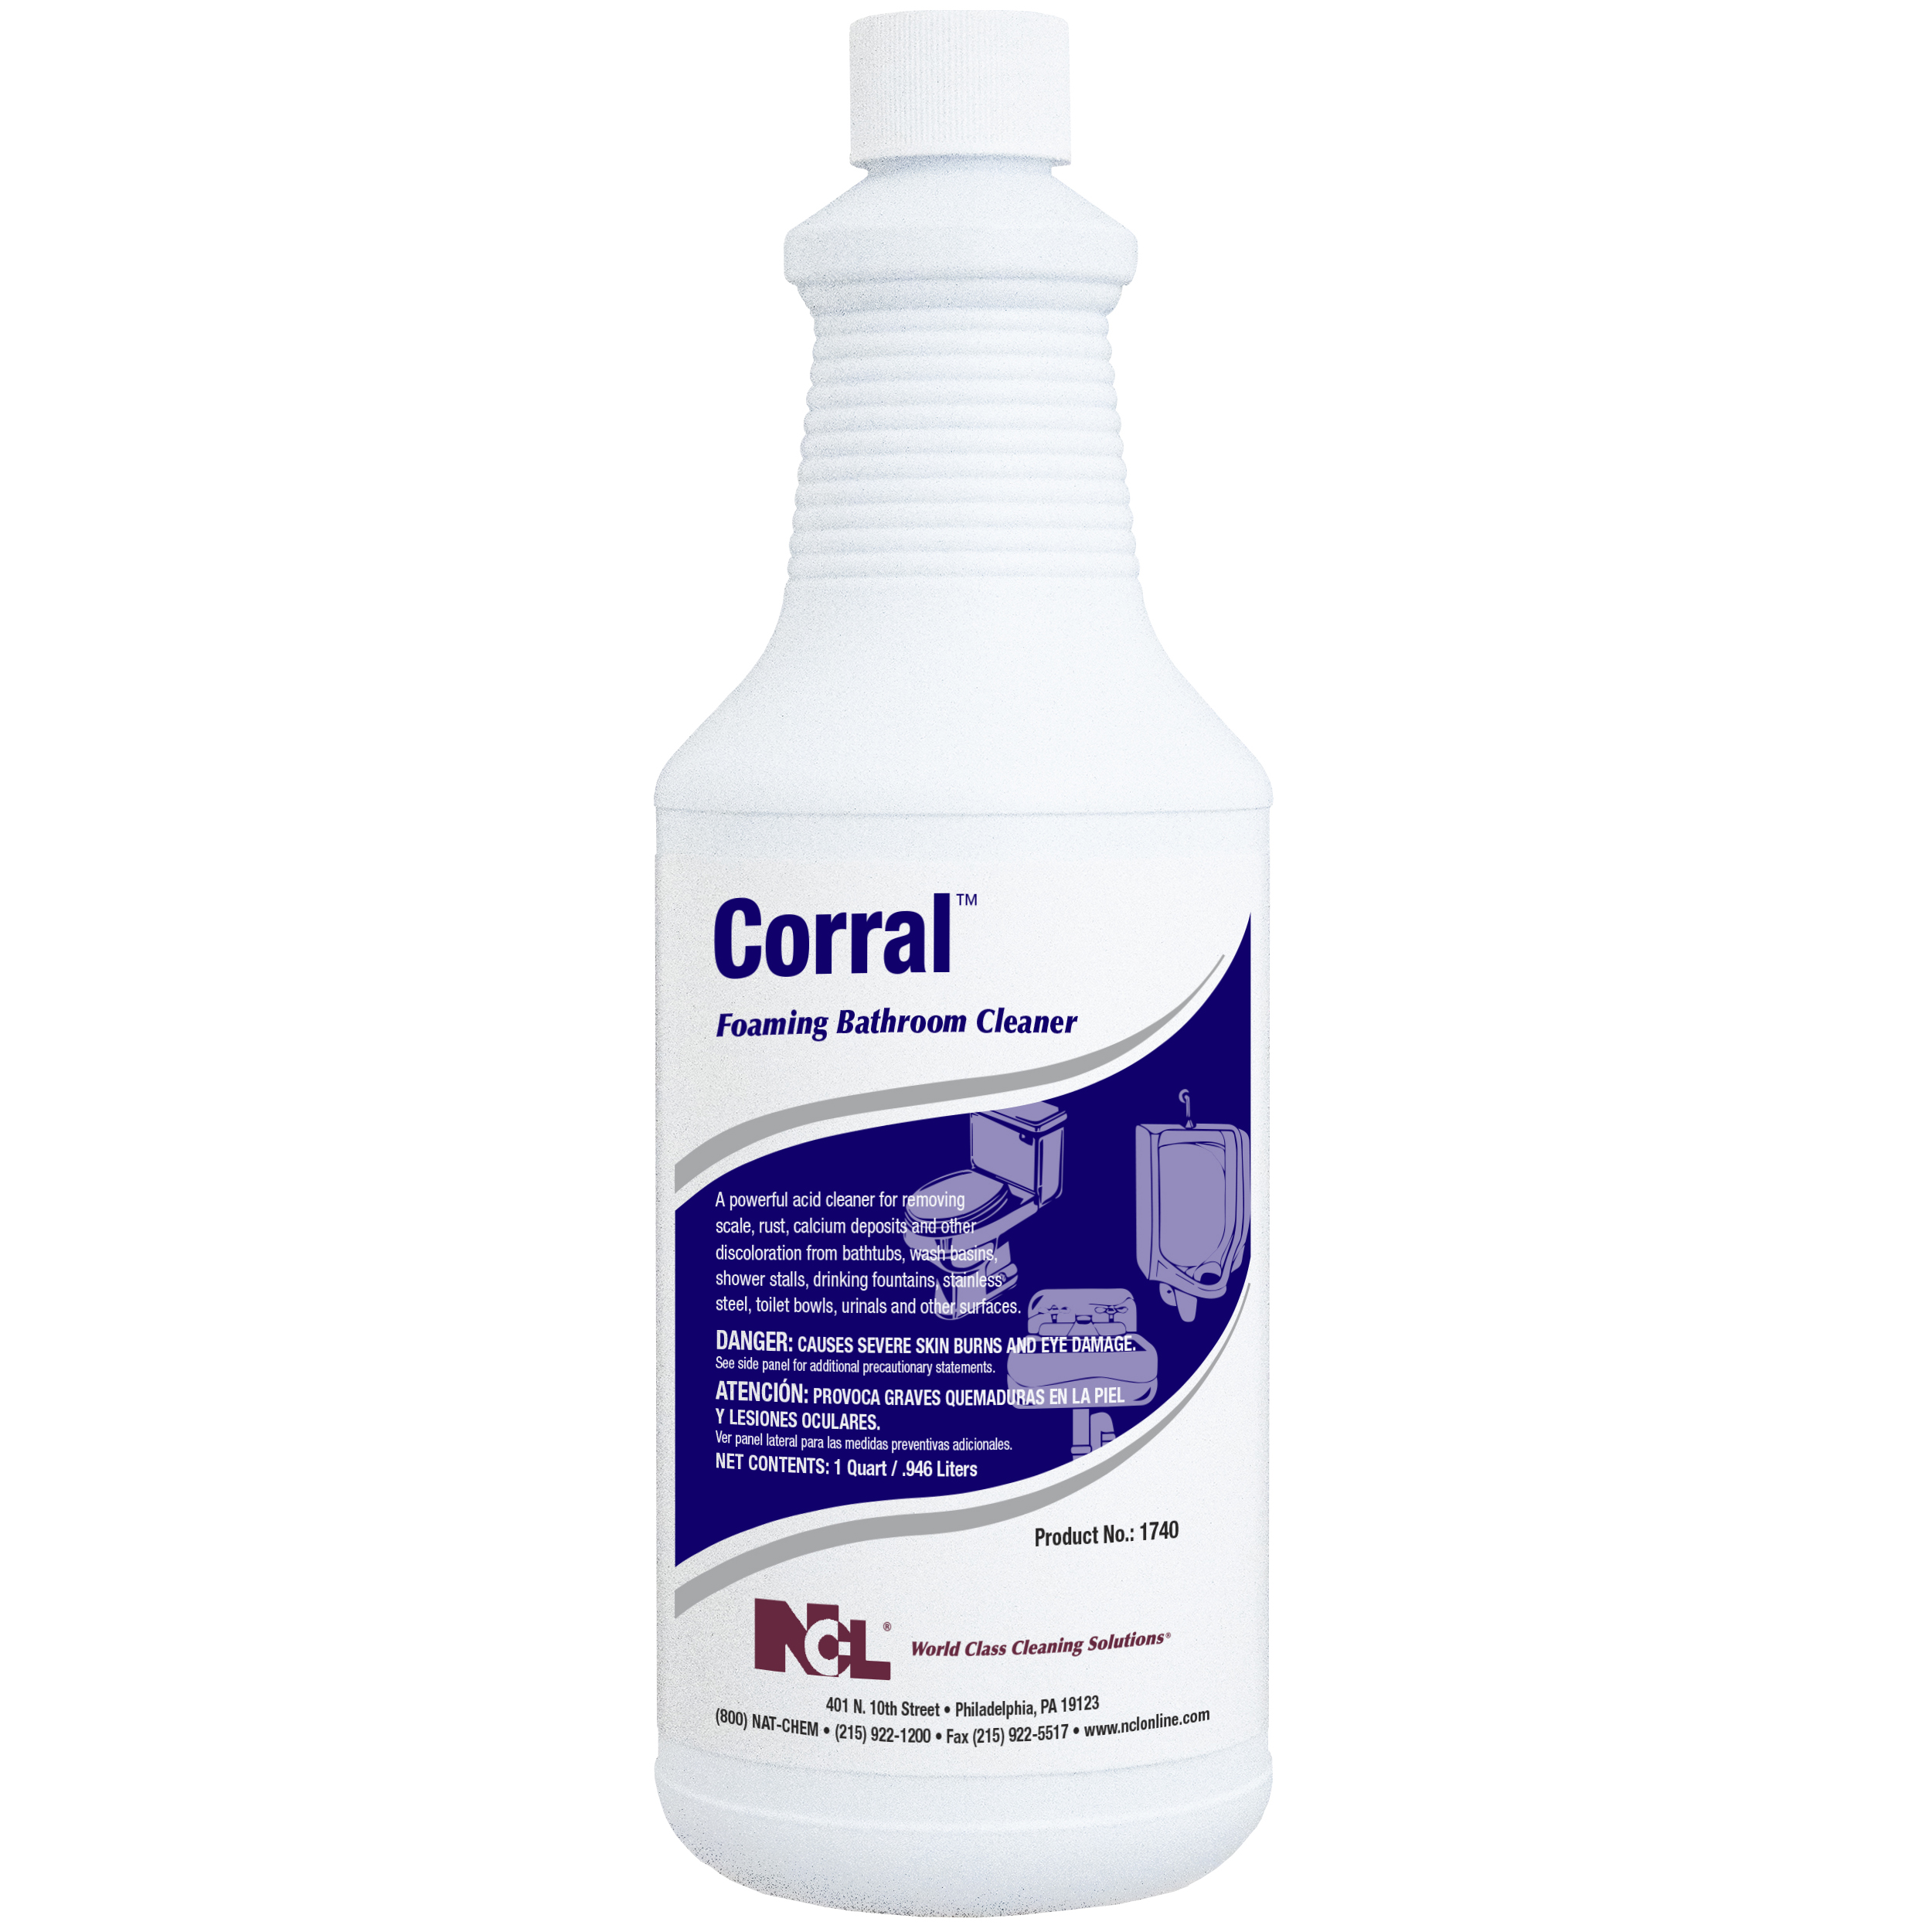  CORRAL Foaming Bathroom Cleaner 12/32 oz (1 Qt.) Case (NCL1740) 